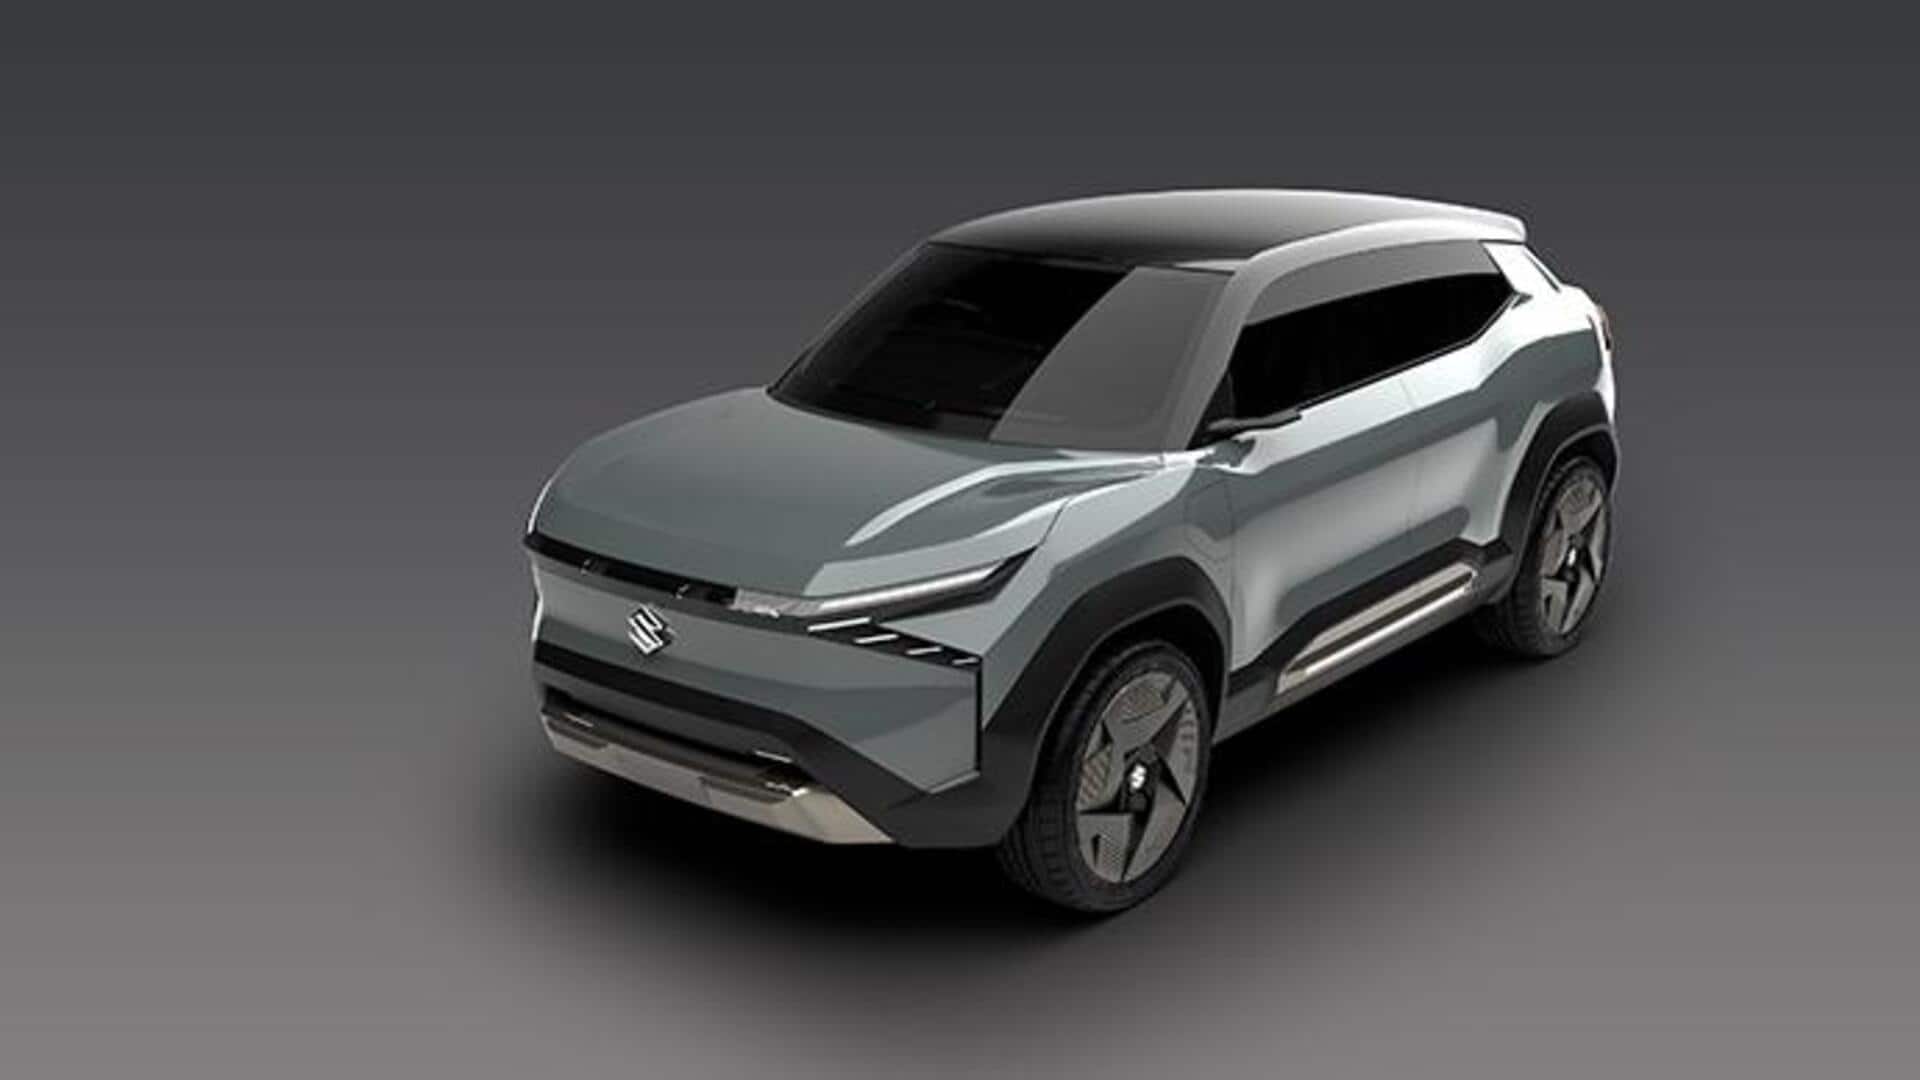 Maruti Suzuki's upcoming cars may carry Escudo and Torqnado monikers